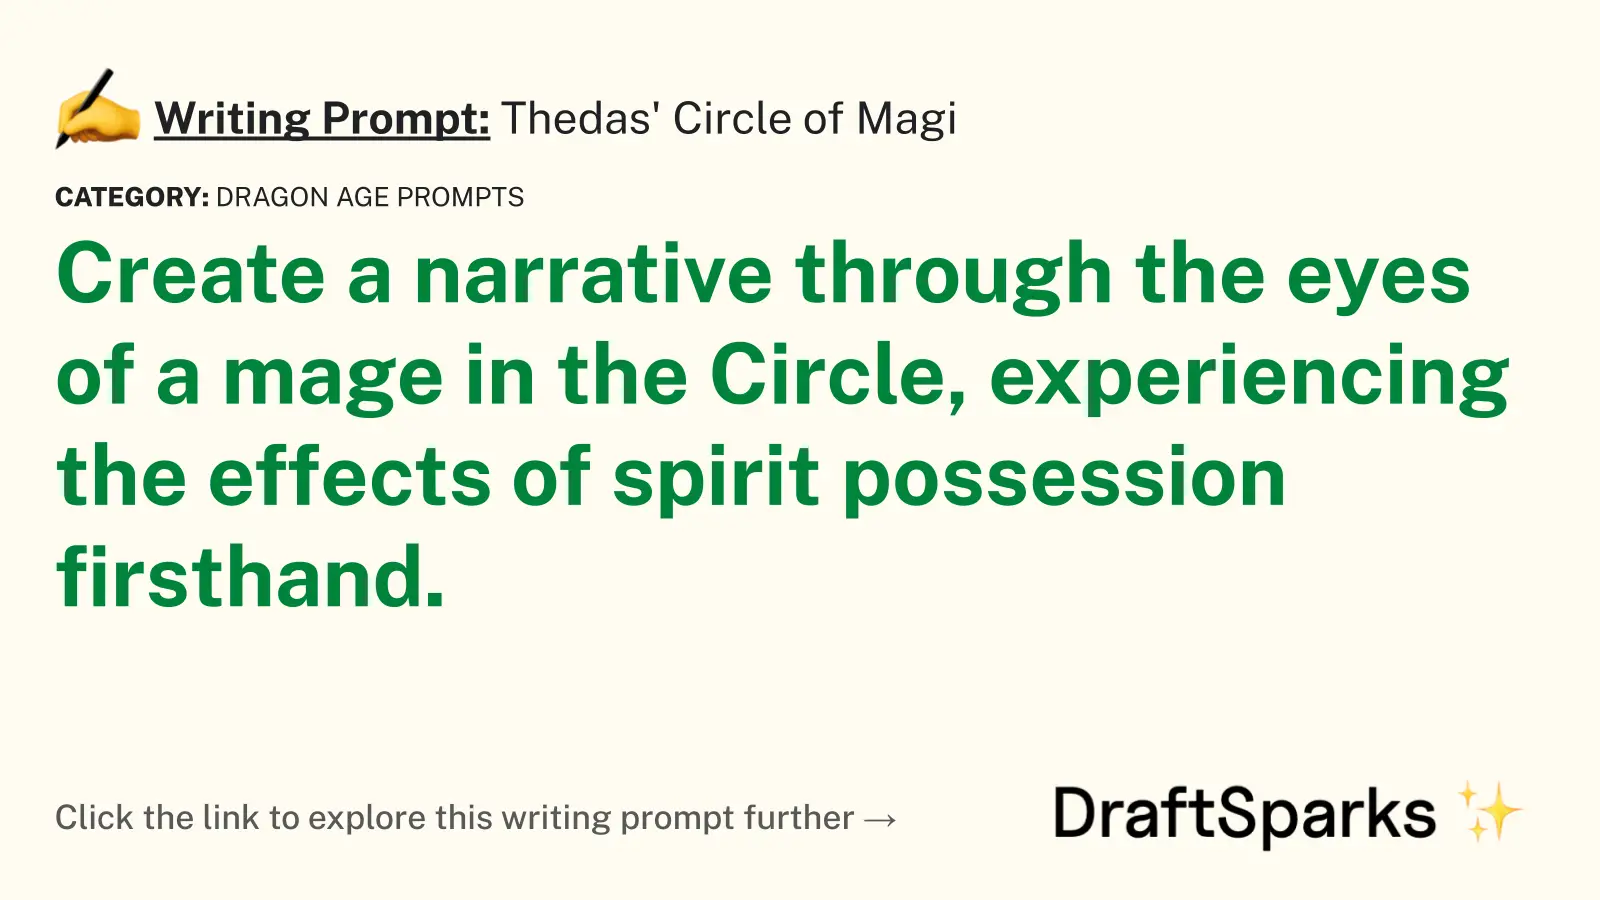 Thedas’ Circle of Magi